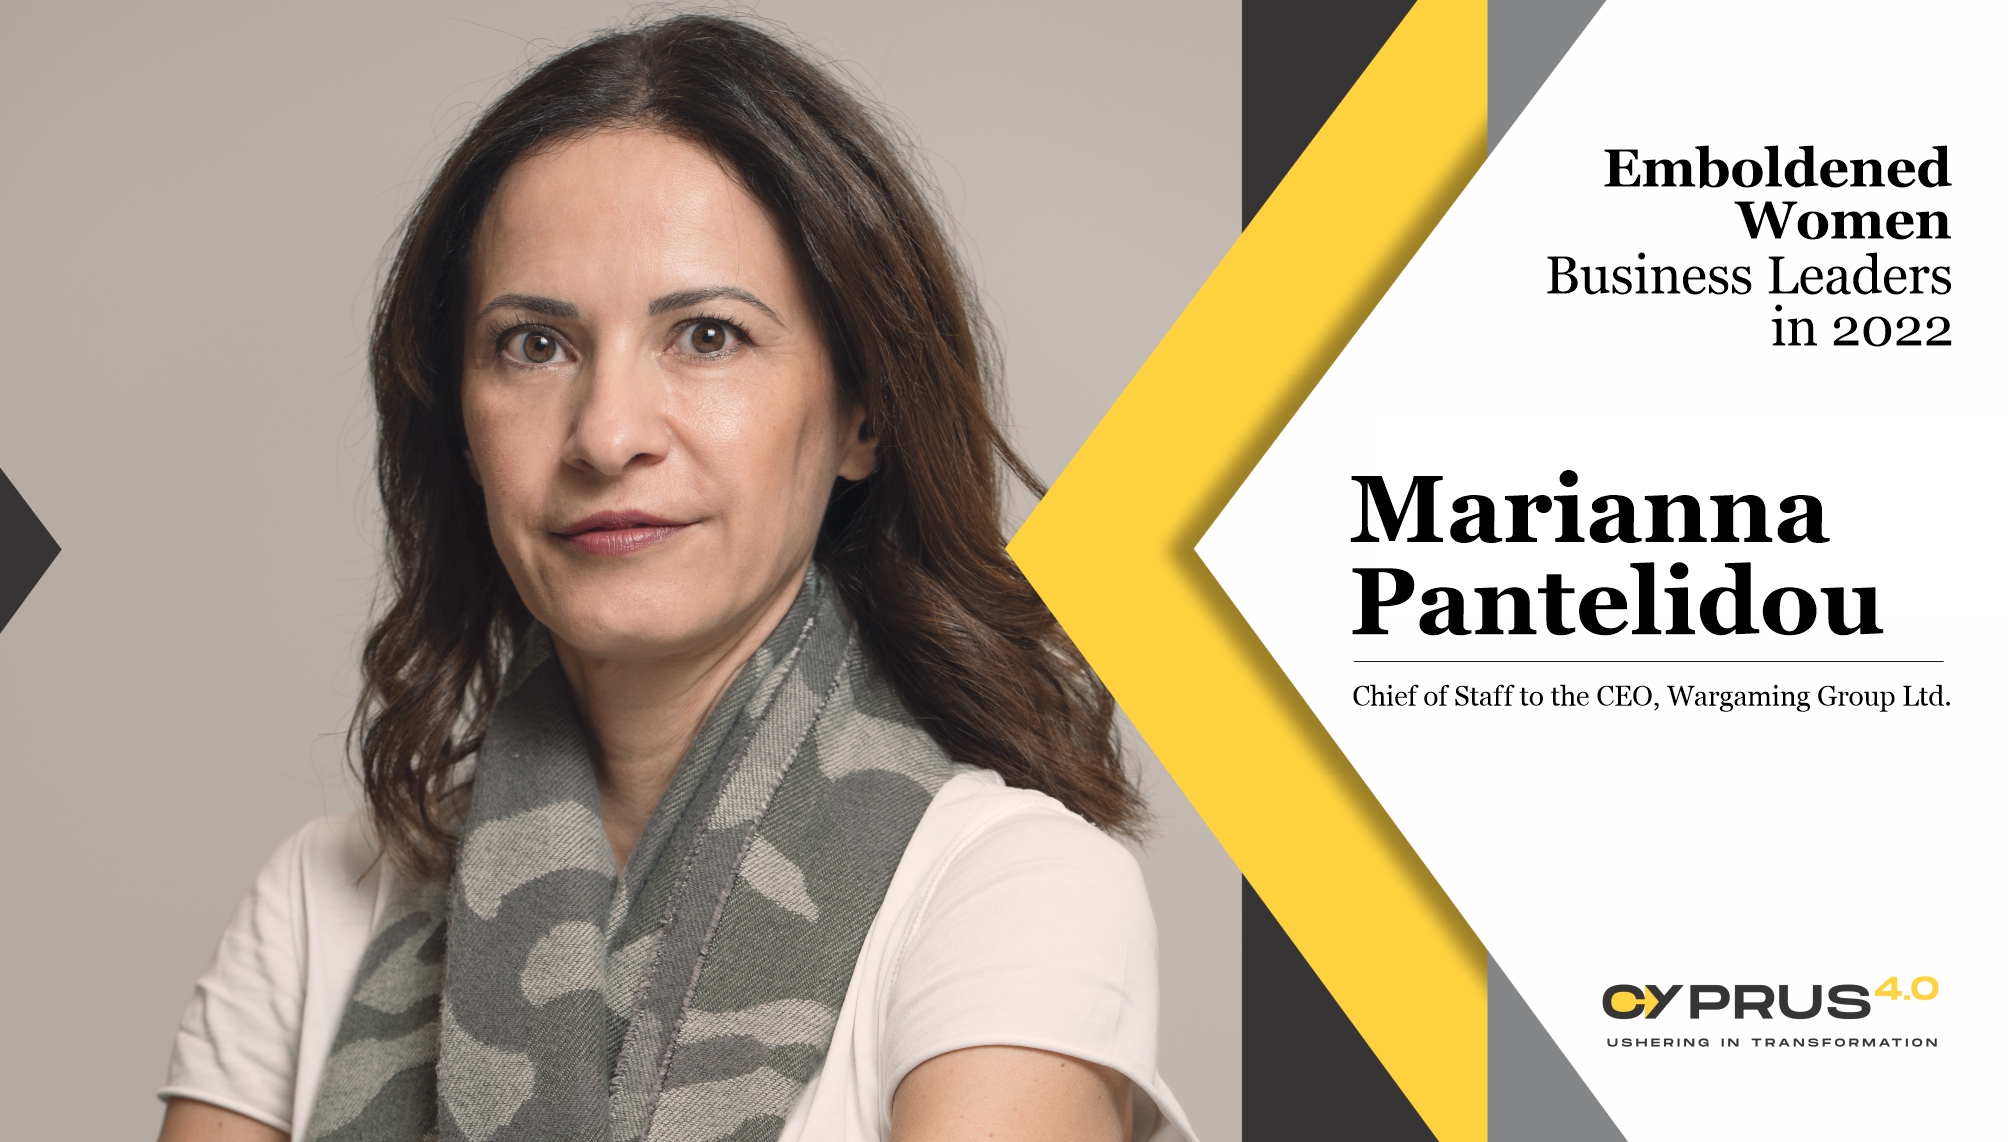 image Marianna Pantelidou: Emboldened Women Business Leaders in 2022